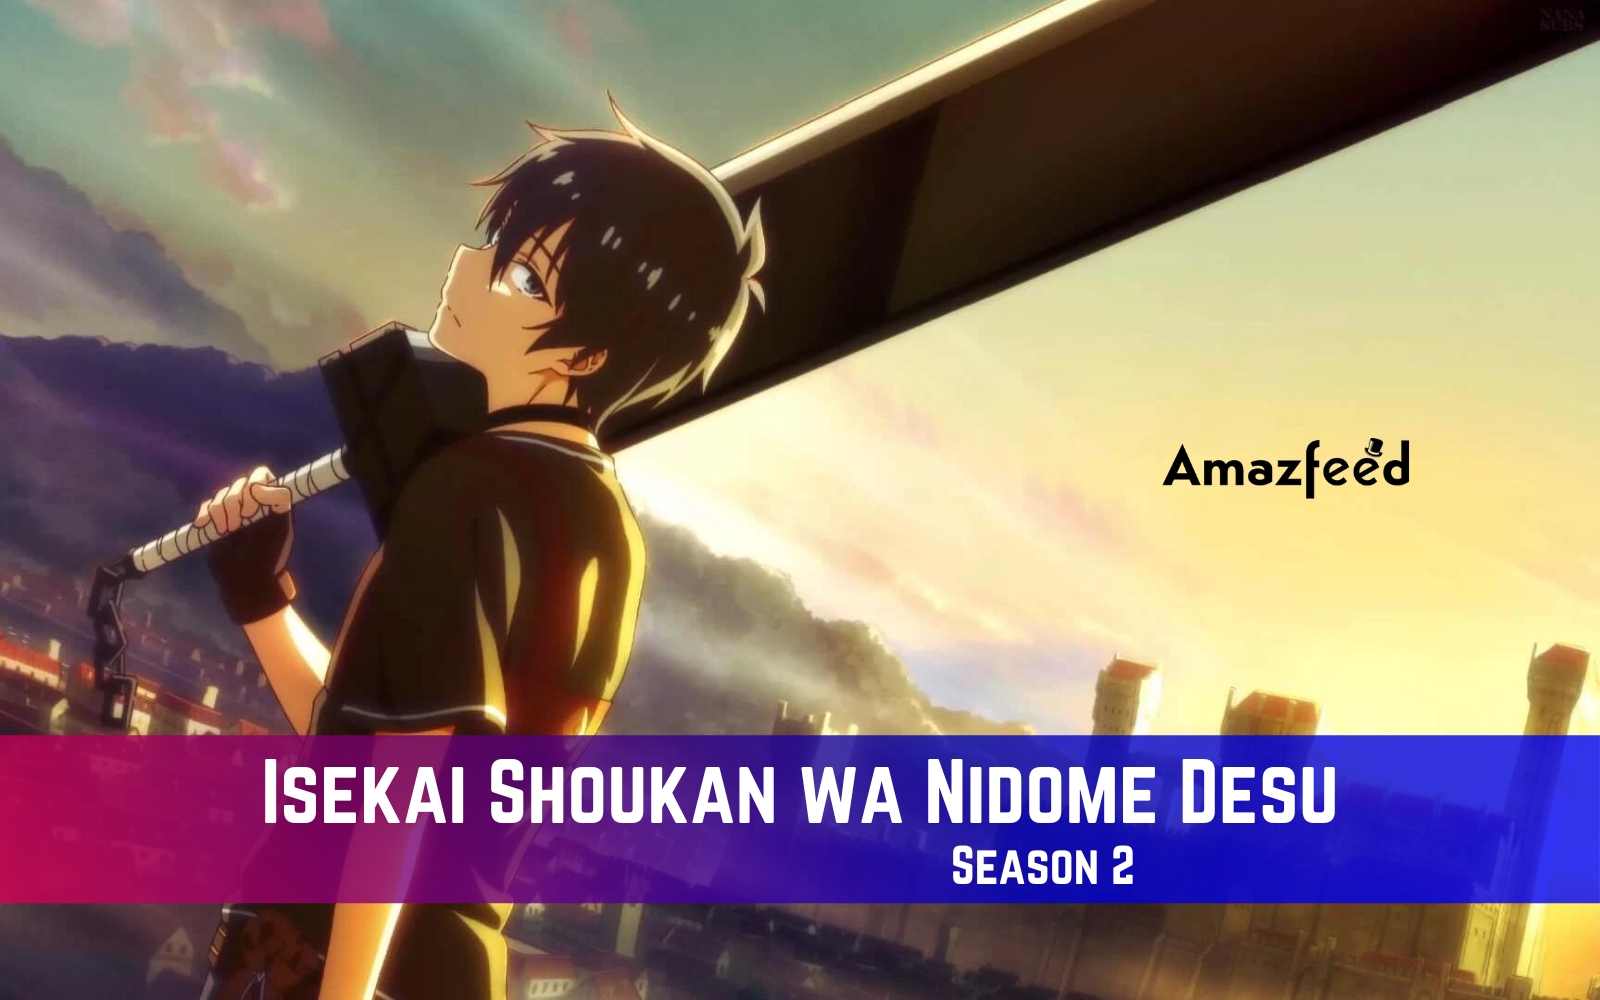 Isekai Shoukan wa Nidome Desu Episode 6 Release Date, Spoiler